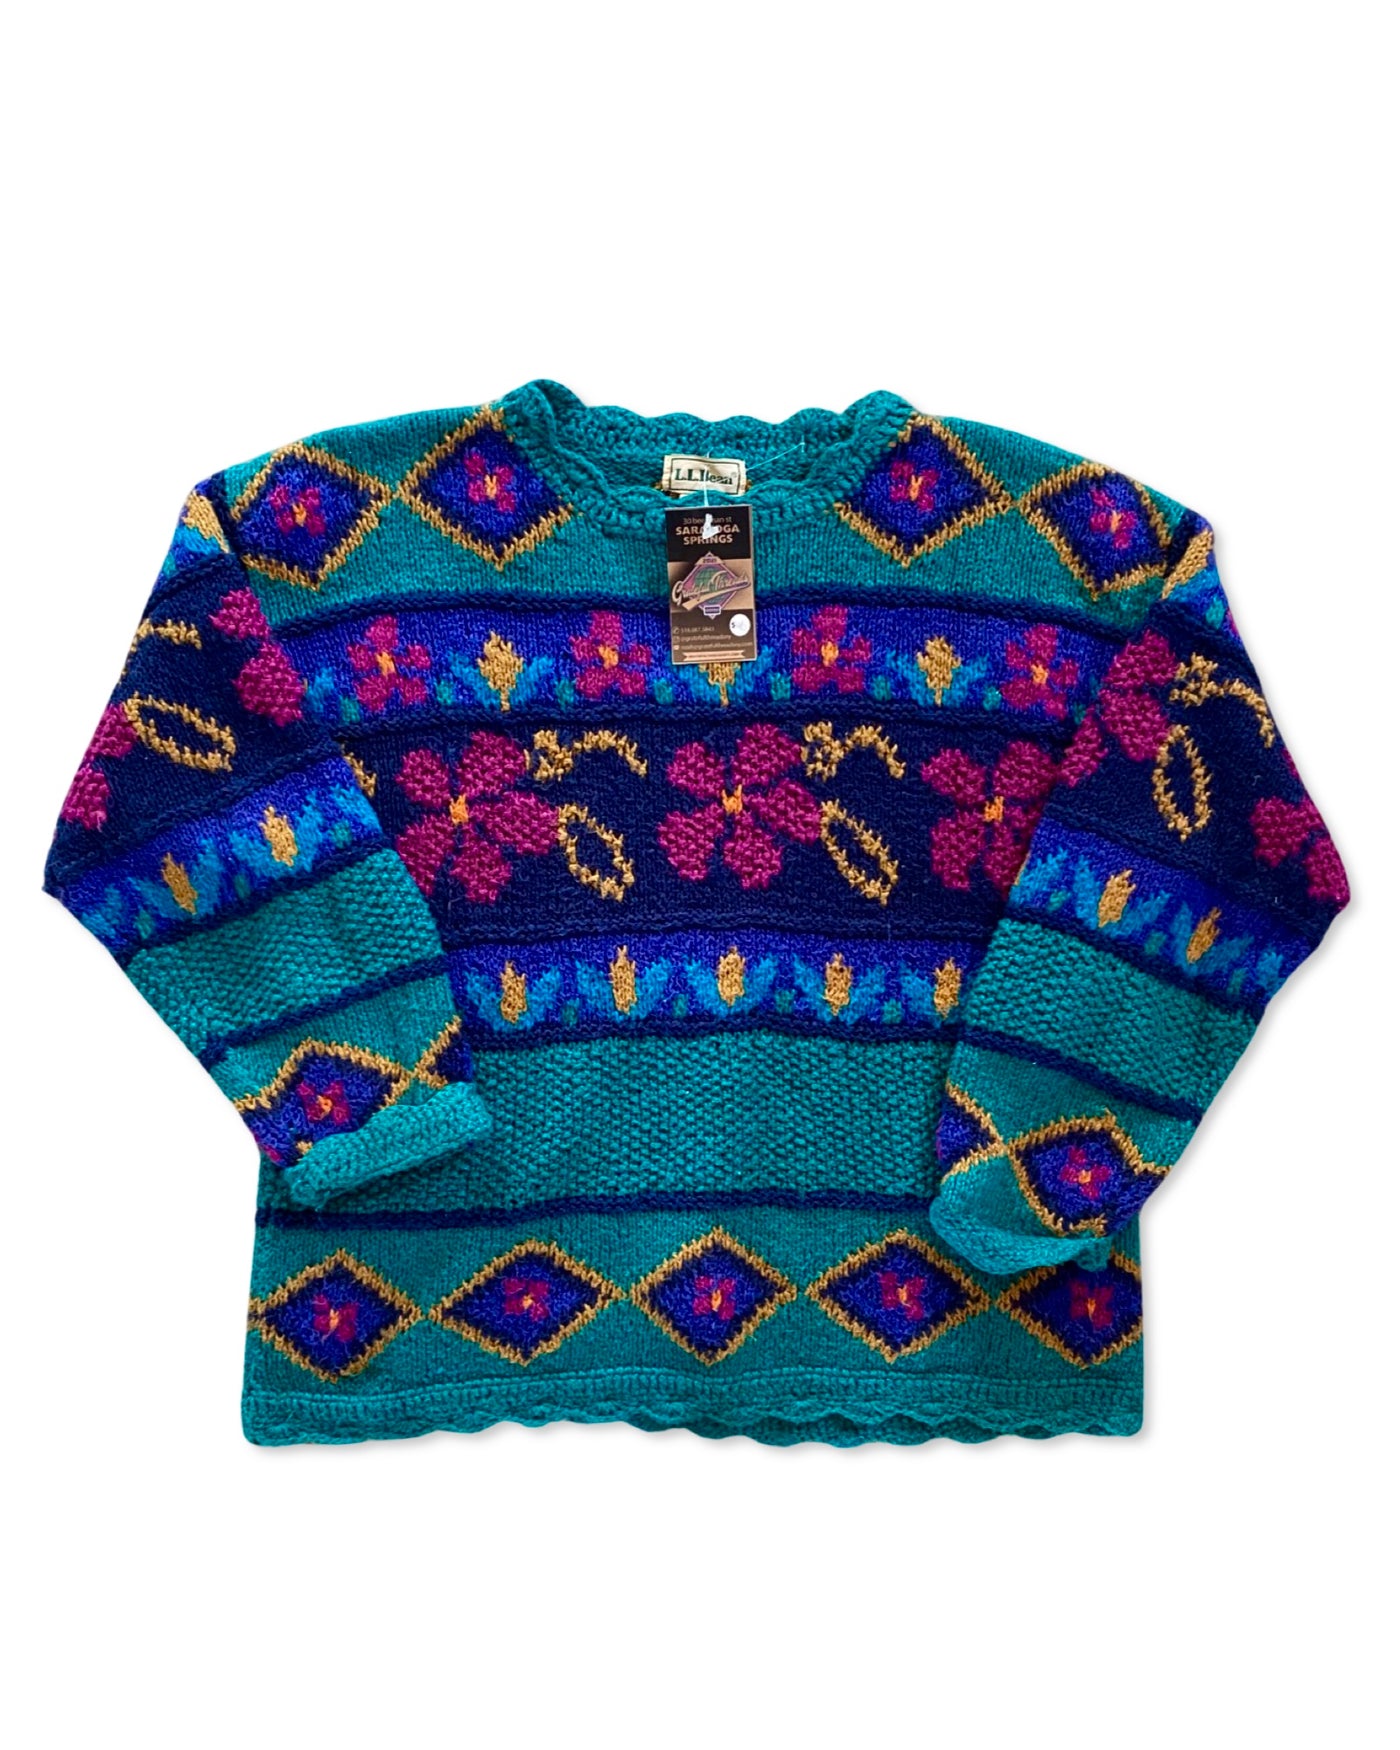 Vintage LL bean Knit Sweater